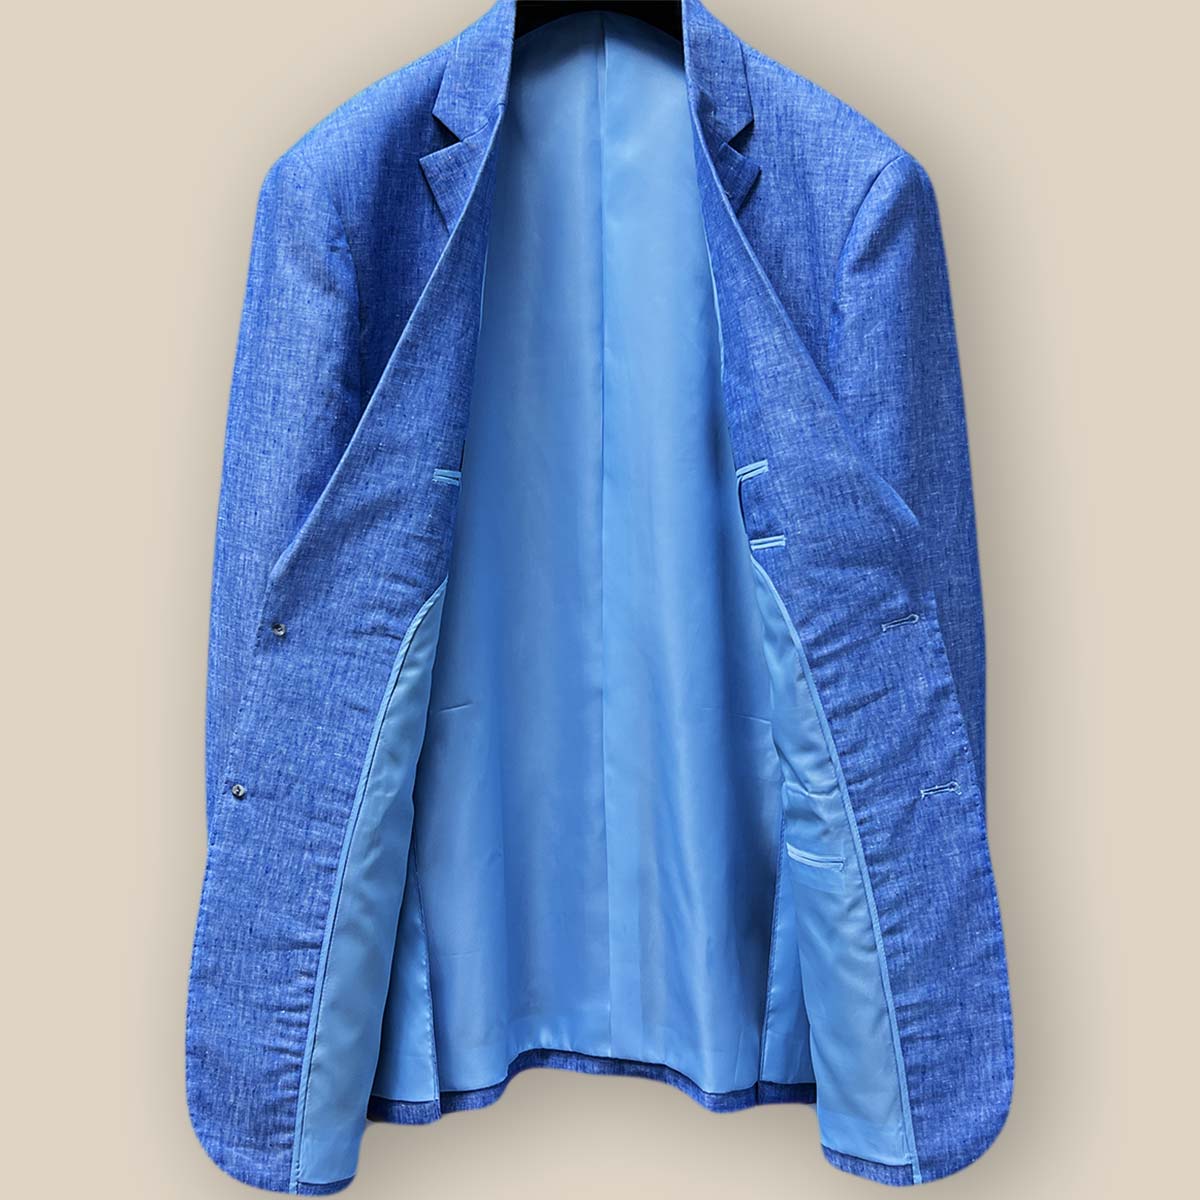 Full interior view of light blue solid Irish linen men's suit jacket, displaying sky blue bemberg silk lining